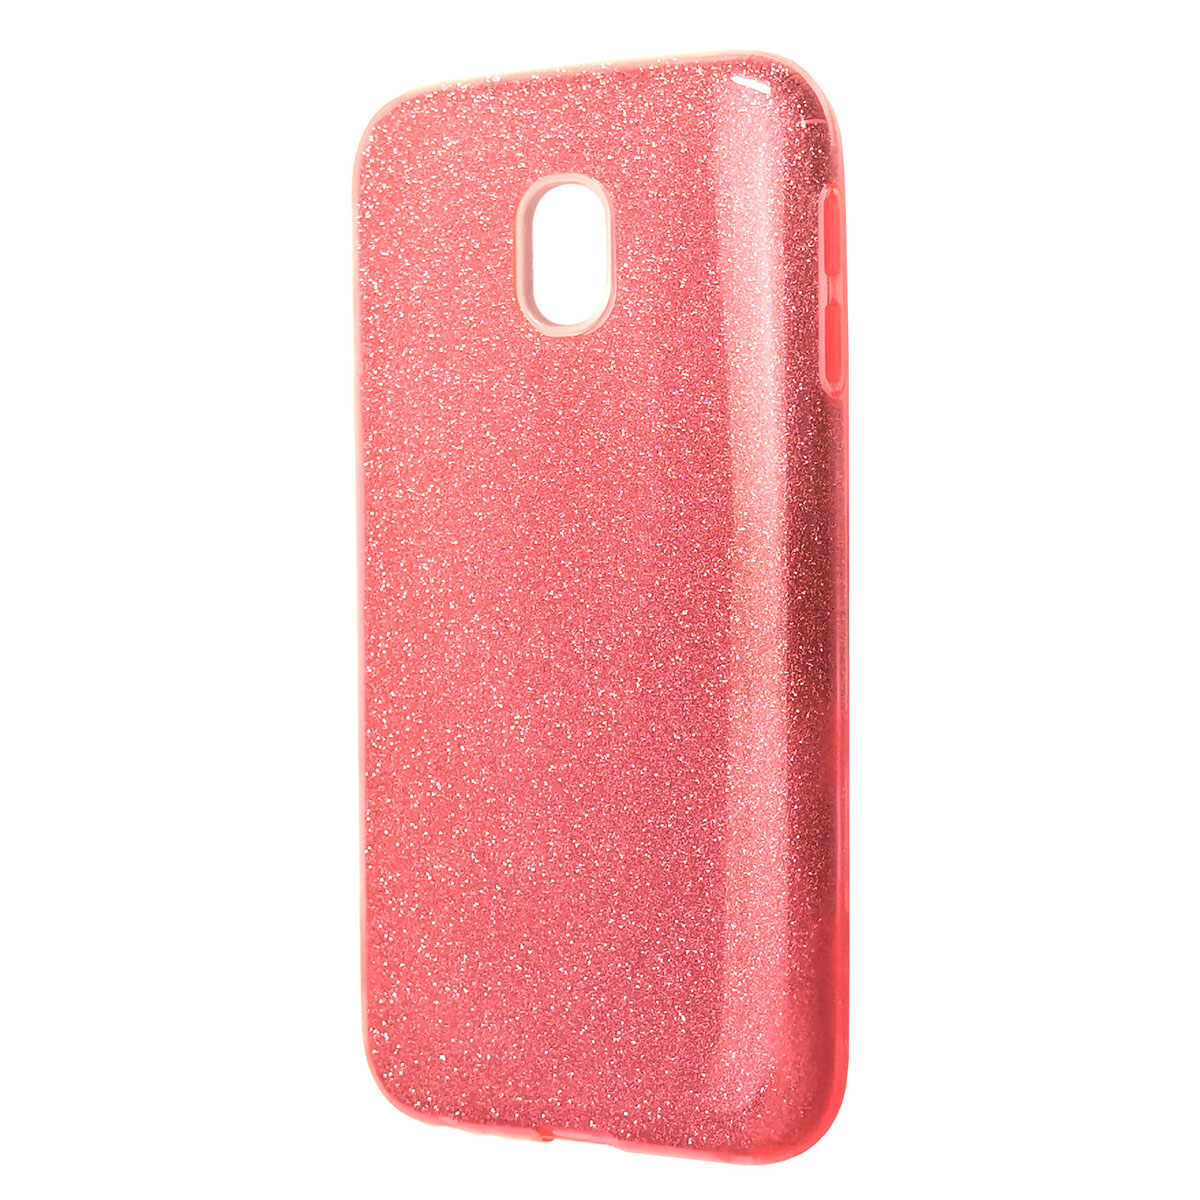 Чехол накладка для SAMSUNG Galaxy J3 2017 (SM-J330), силикон, блестки, цвет розовый.